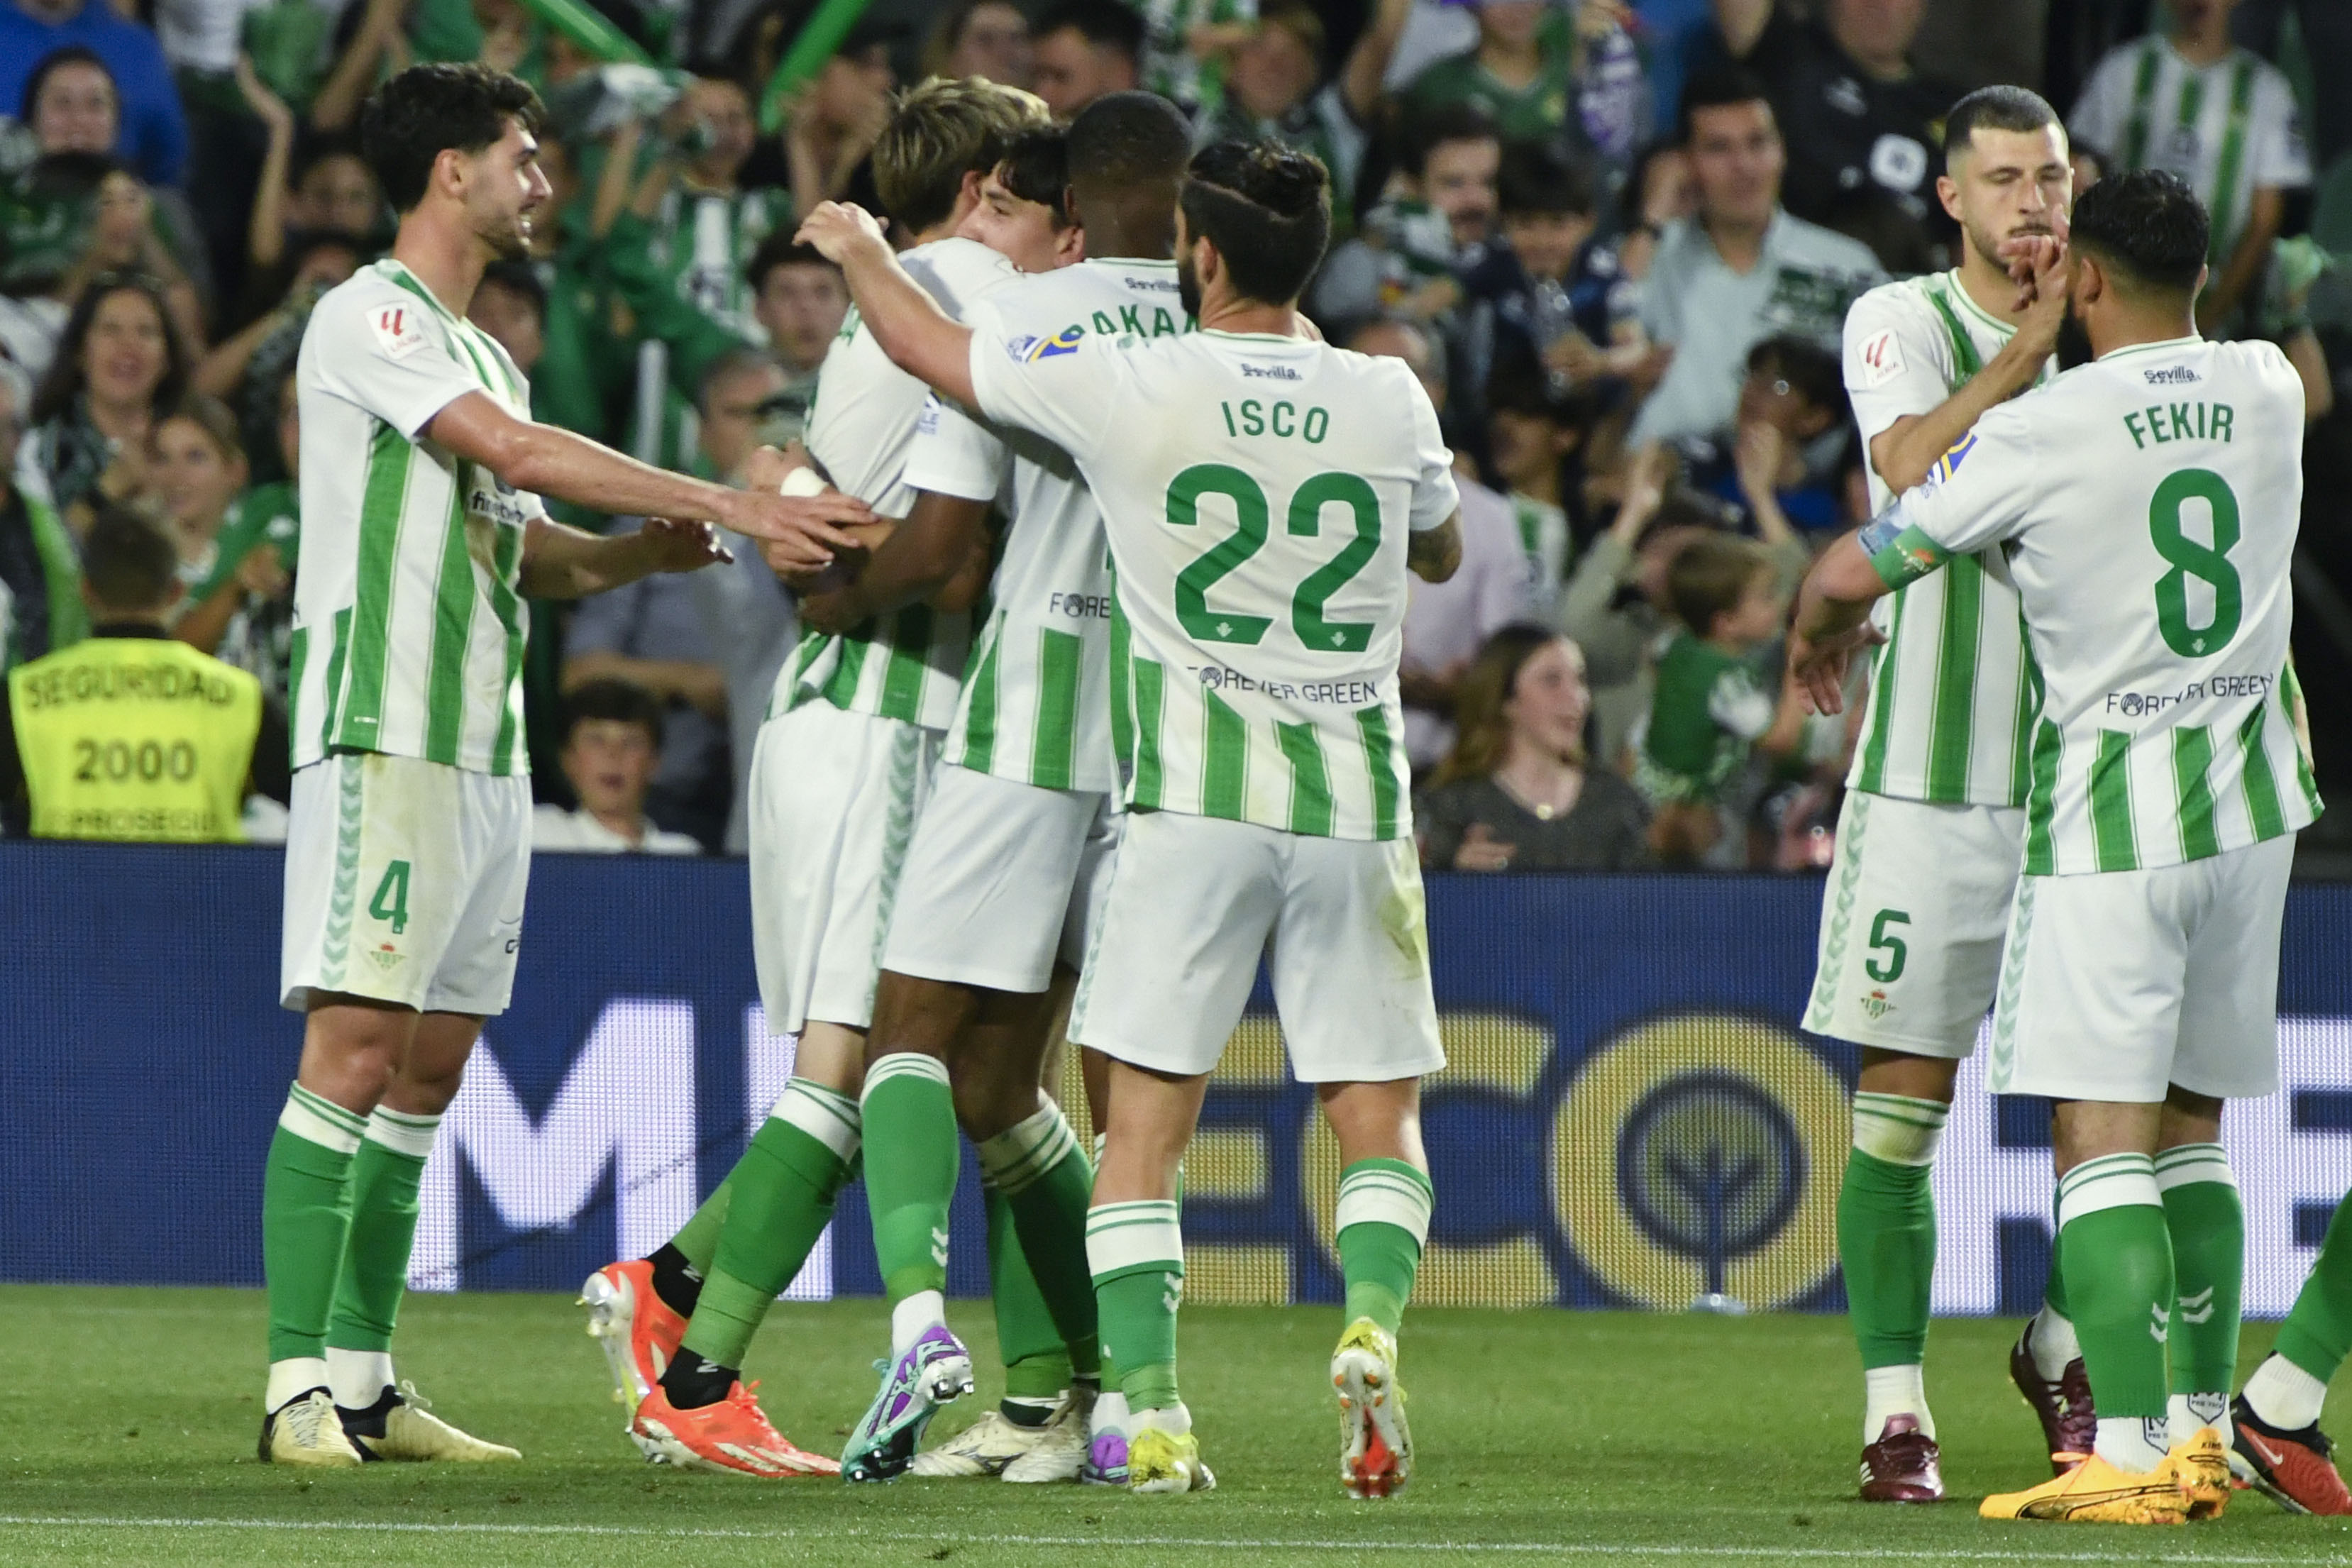 Resumen y goles del Real Betis vs Celta, jornada 31 de LaLiga EA Sports